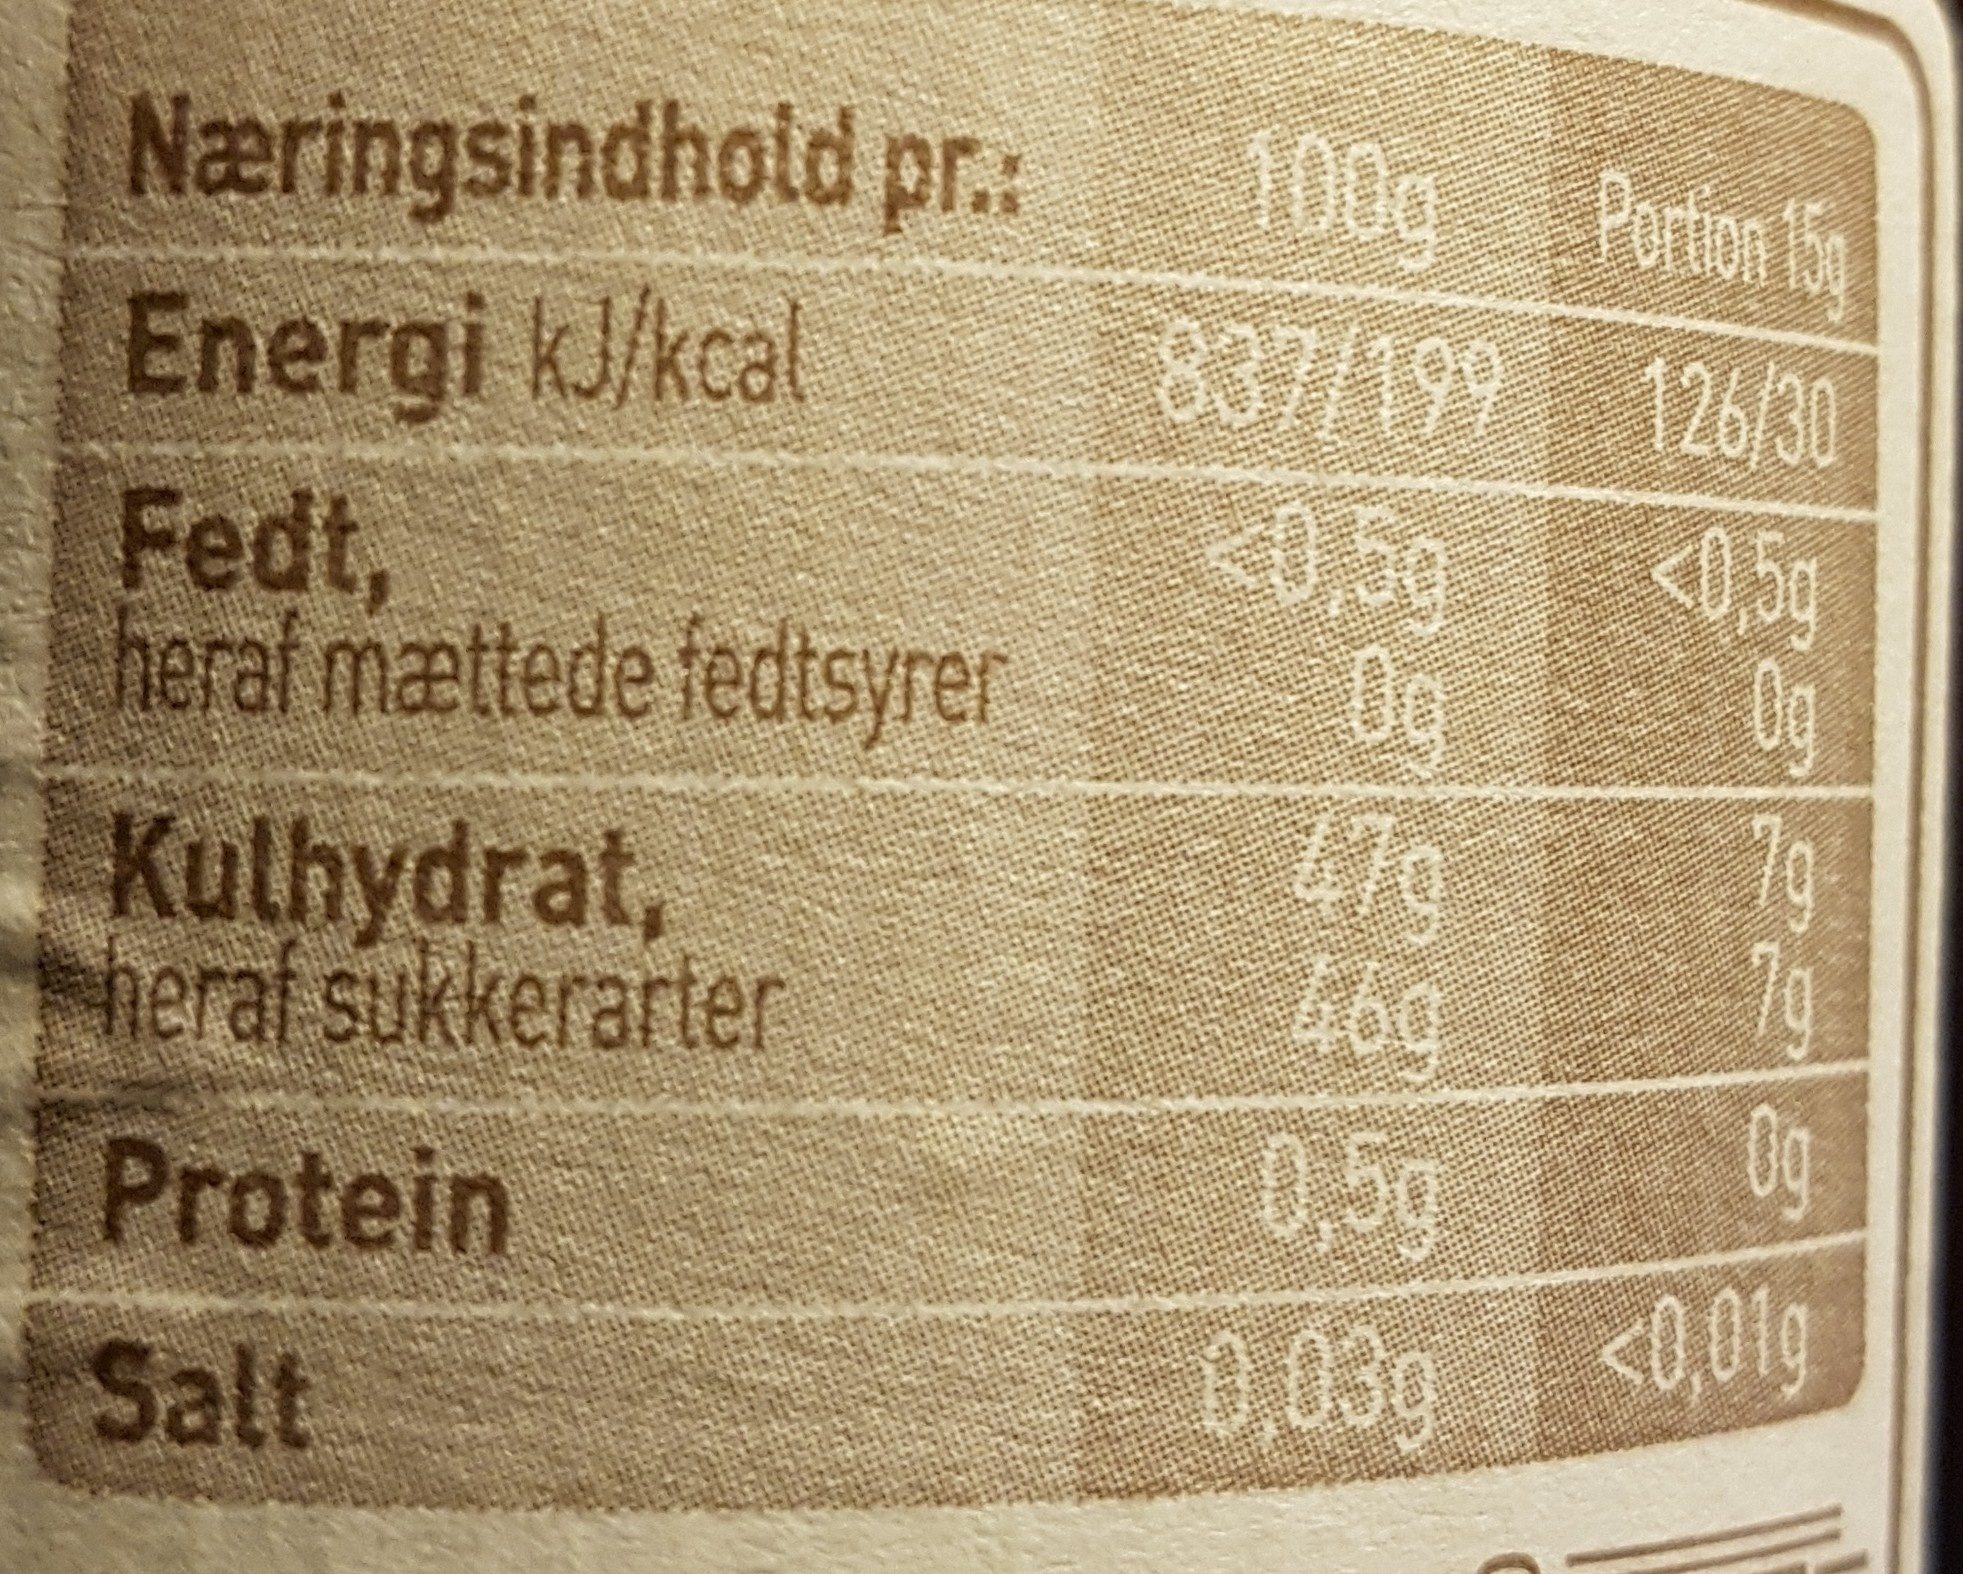 Cremet Boysenbær - Nutrition facts - da